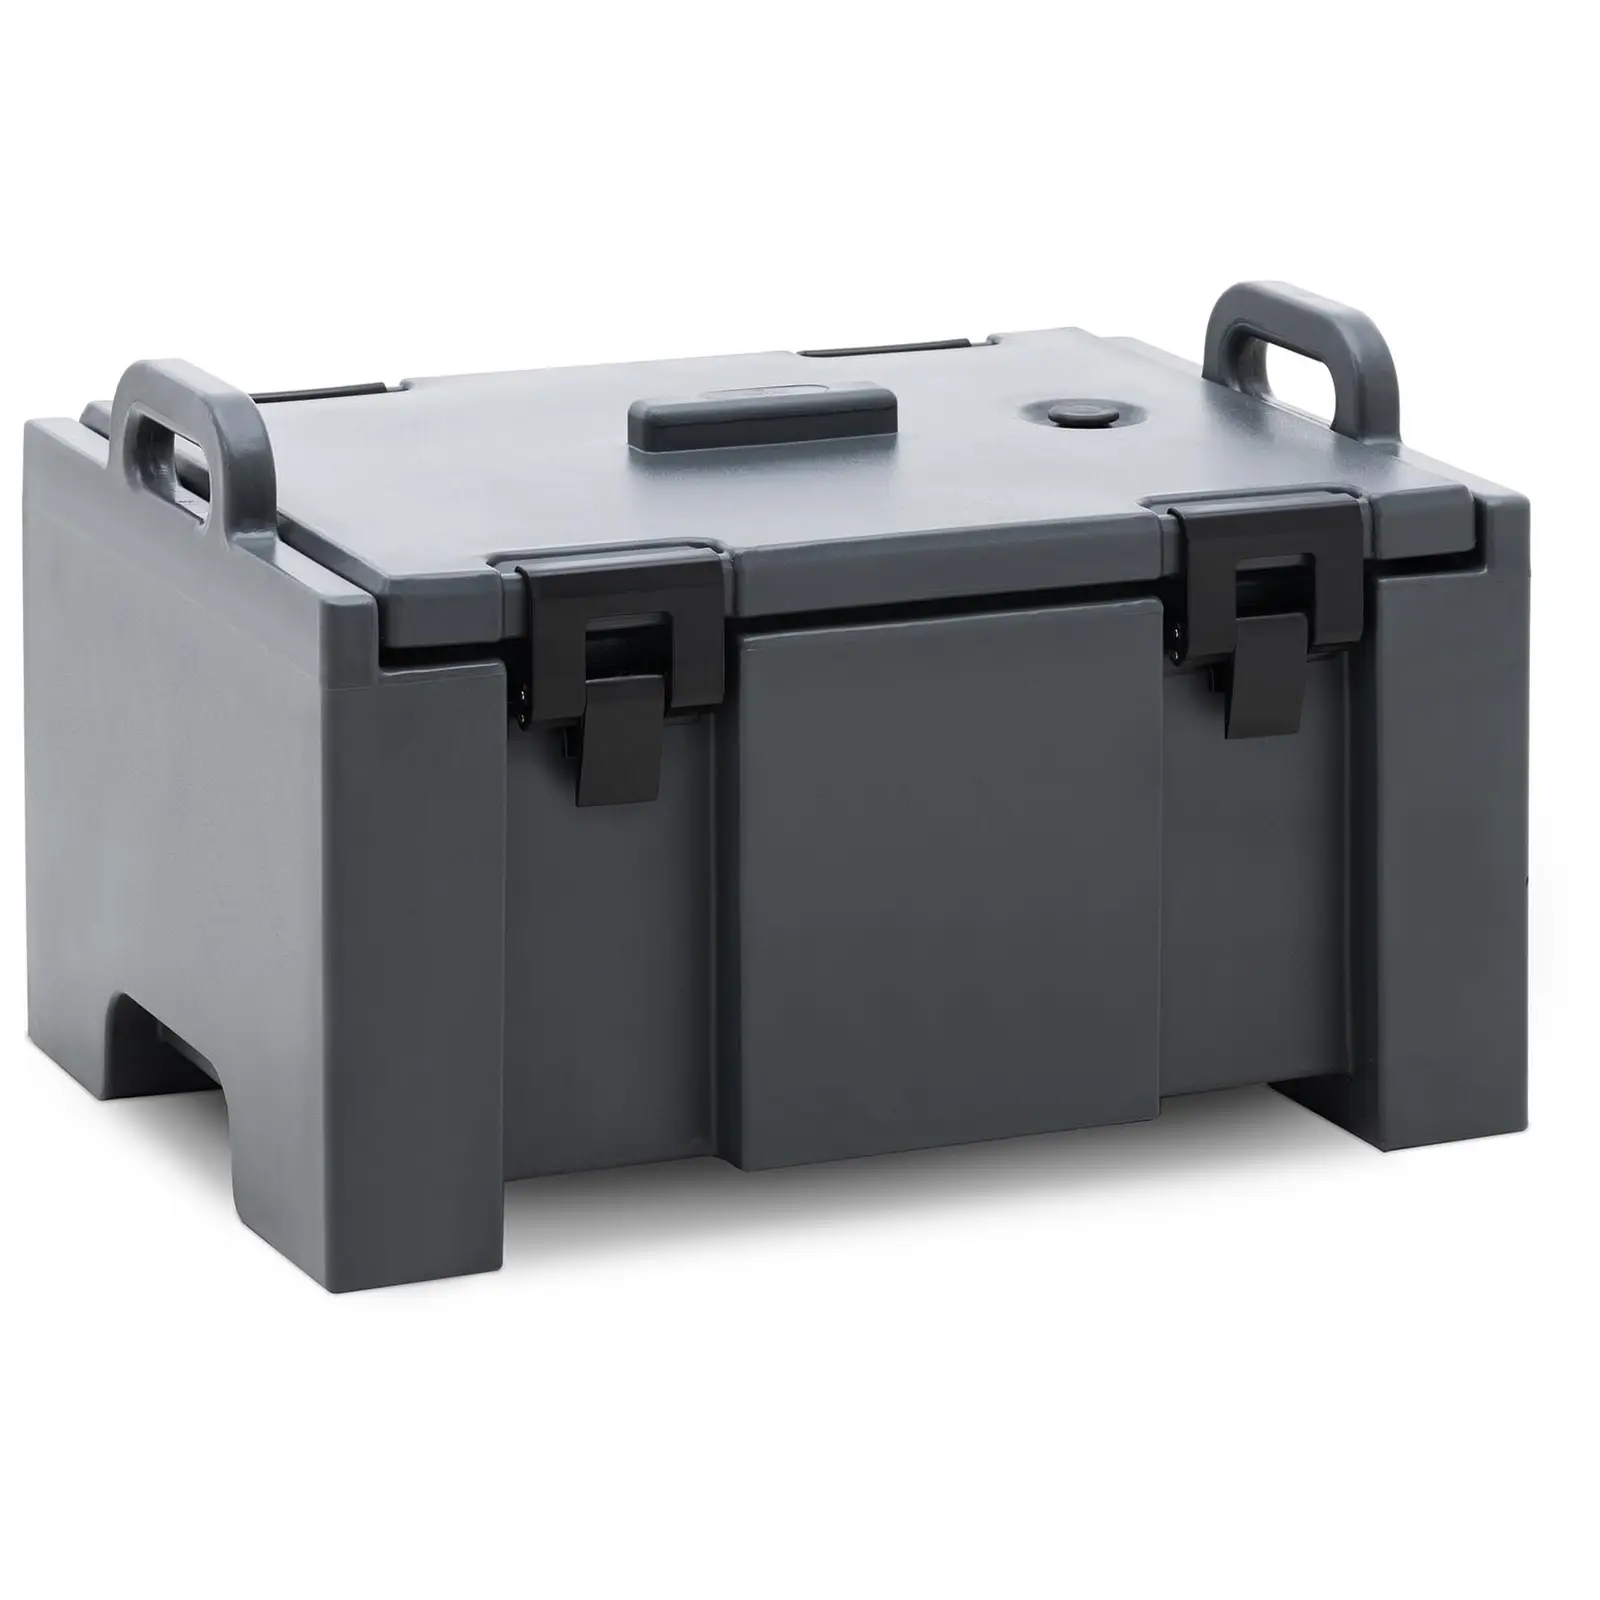 Caja térmica para alimentos - carga superior - para contenedores GN 1/1 (15 - 20 cm de profundidad) - 37 L